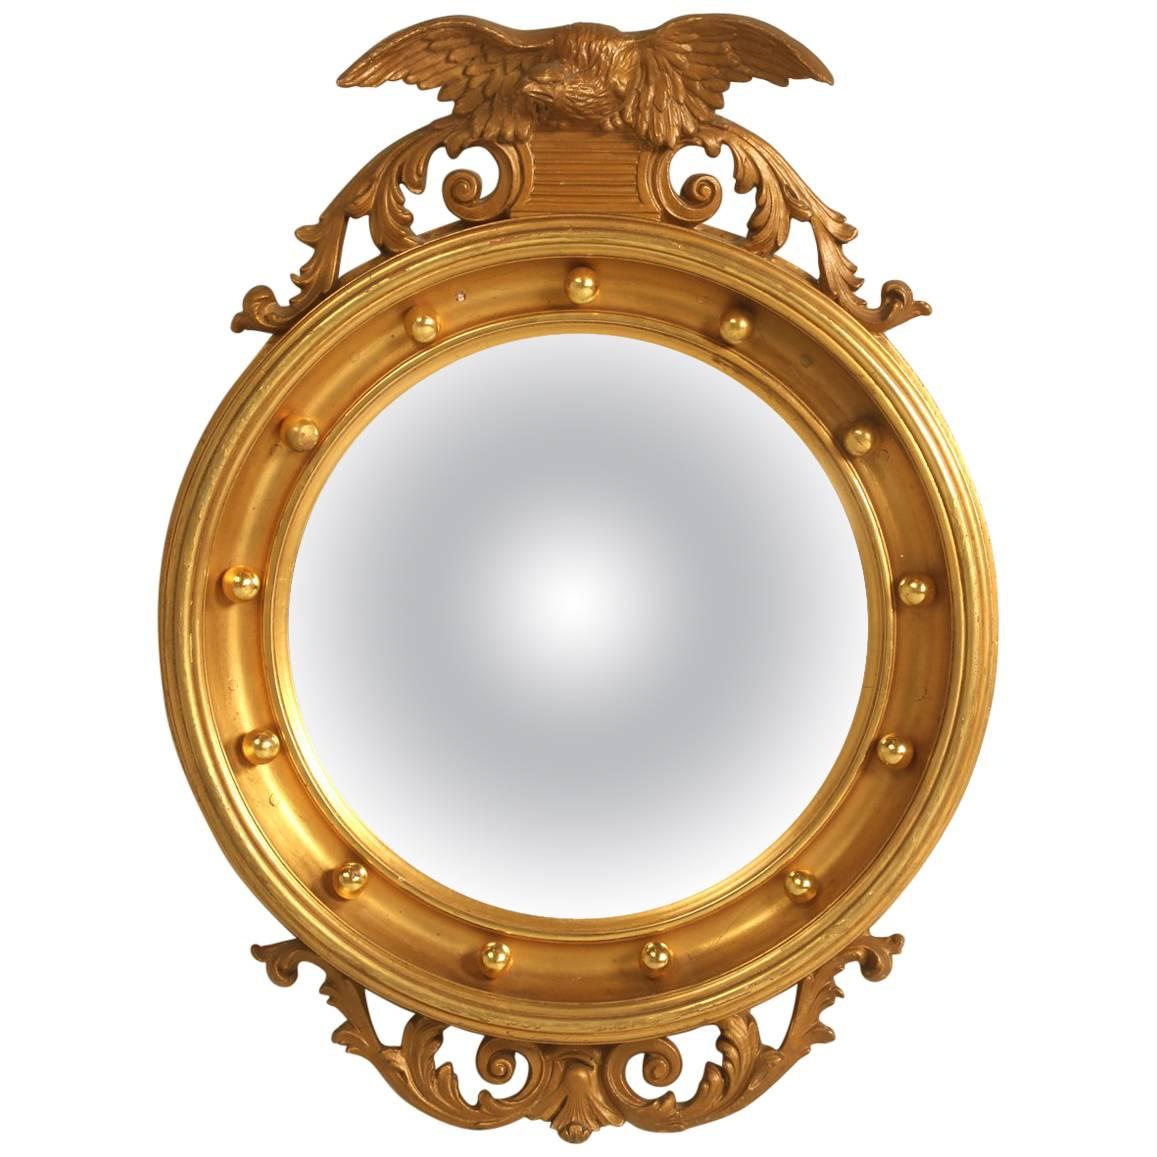 Regency Eagle Convex Mirror with a Gold Leaf Finish